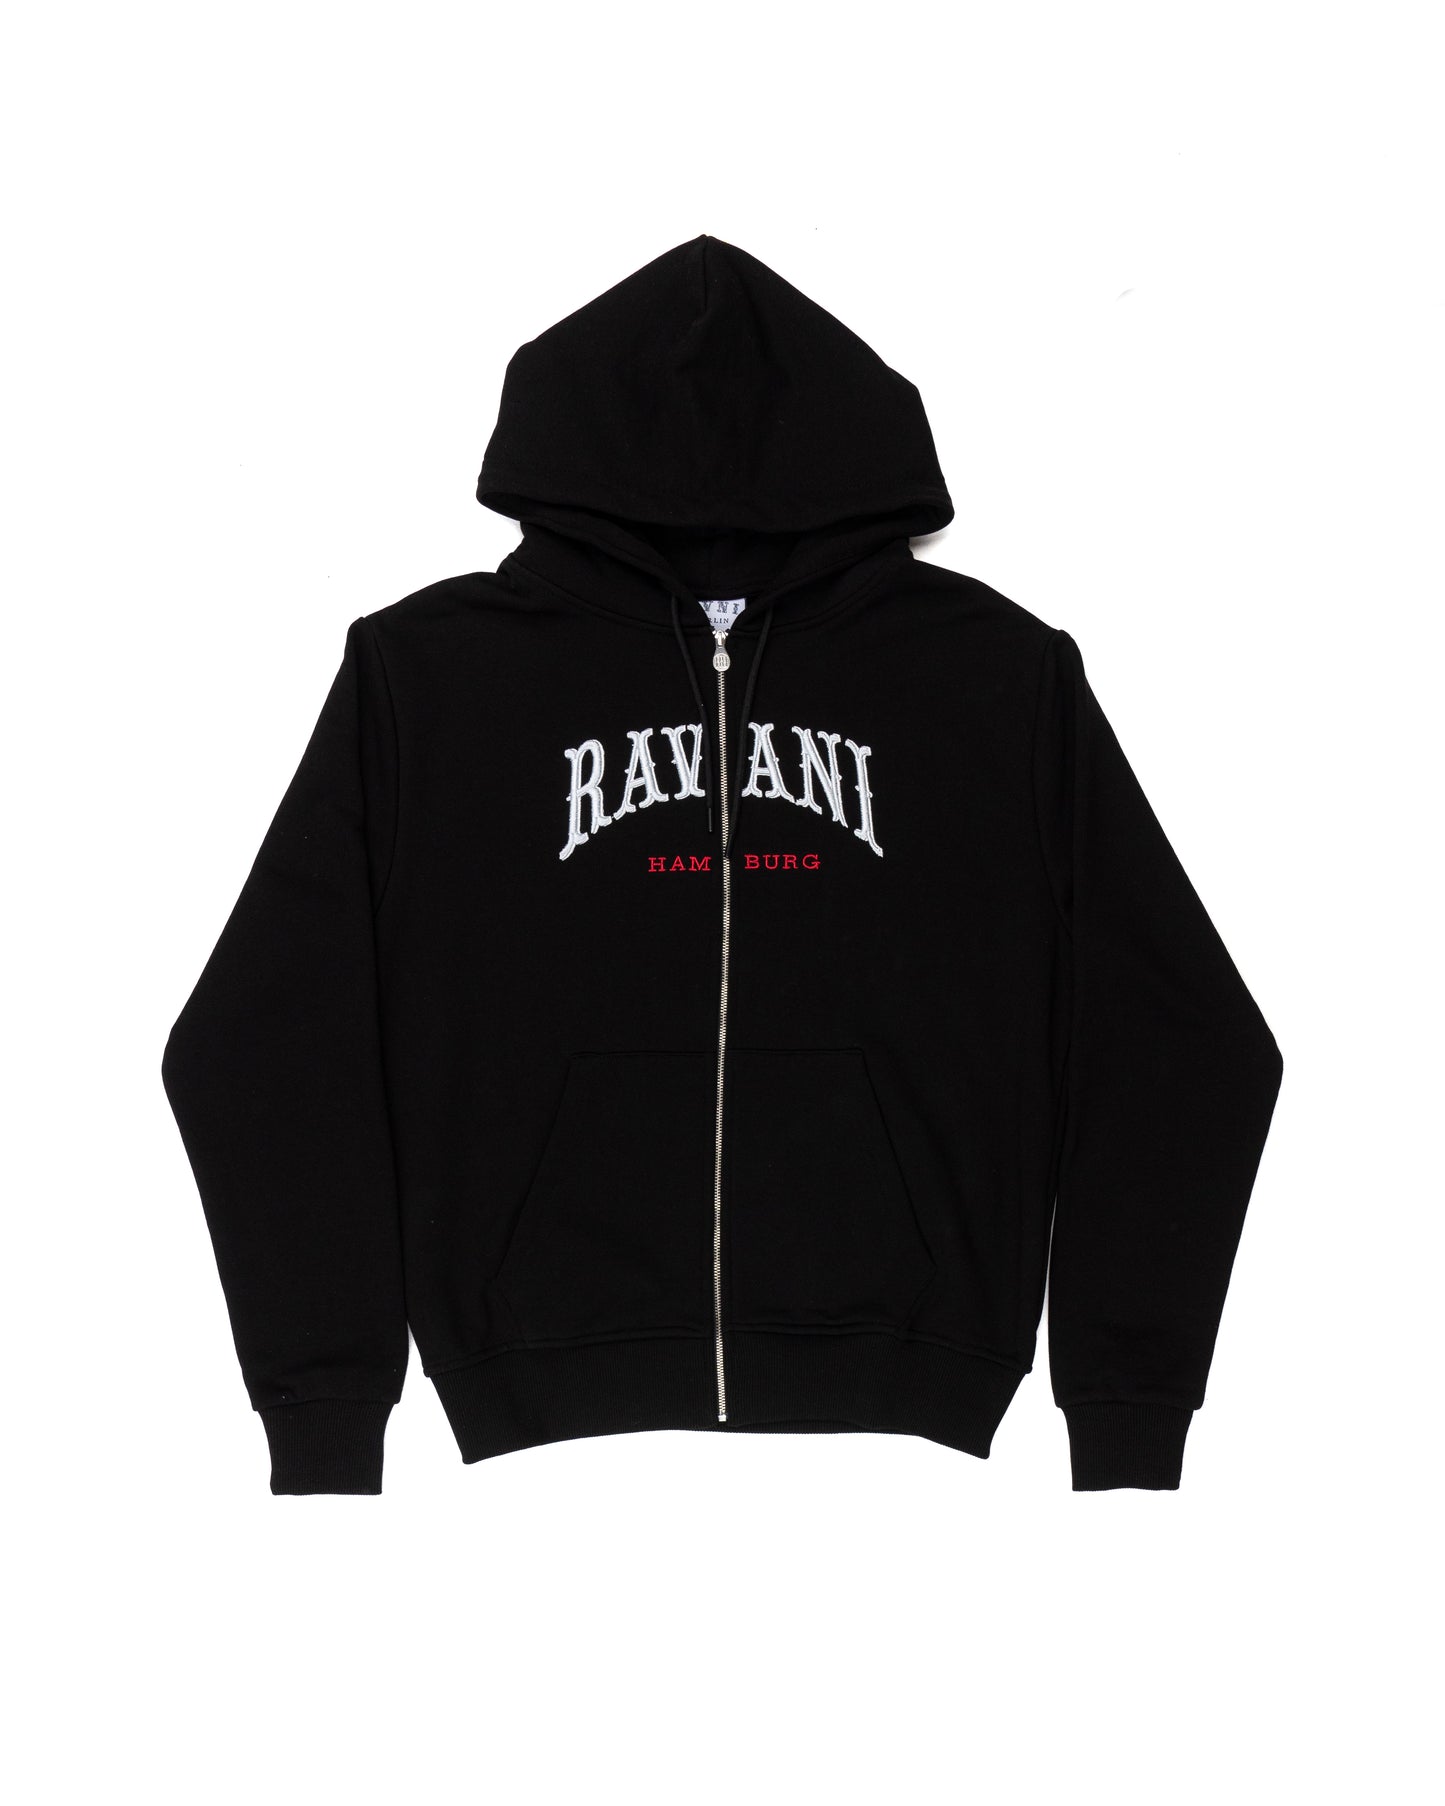 Ravani Hamburg Box Logo Zip Hoodie Black